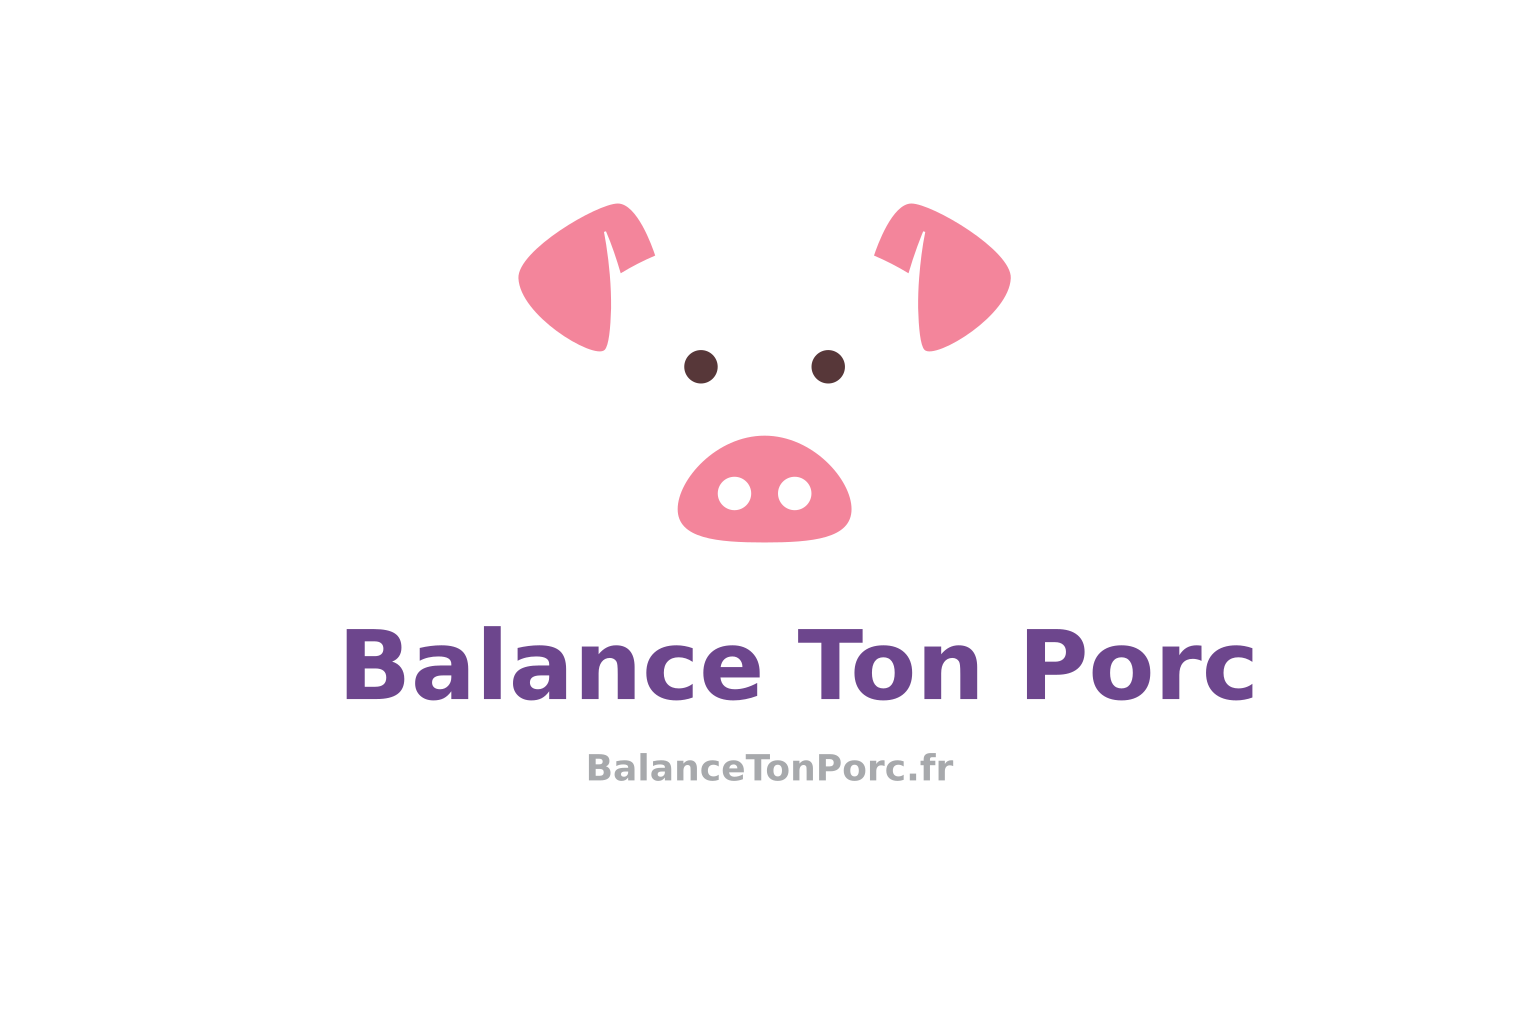 Balance ton porc